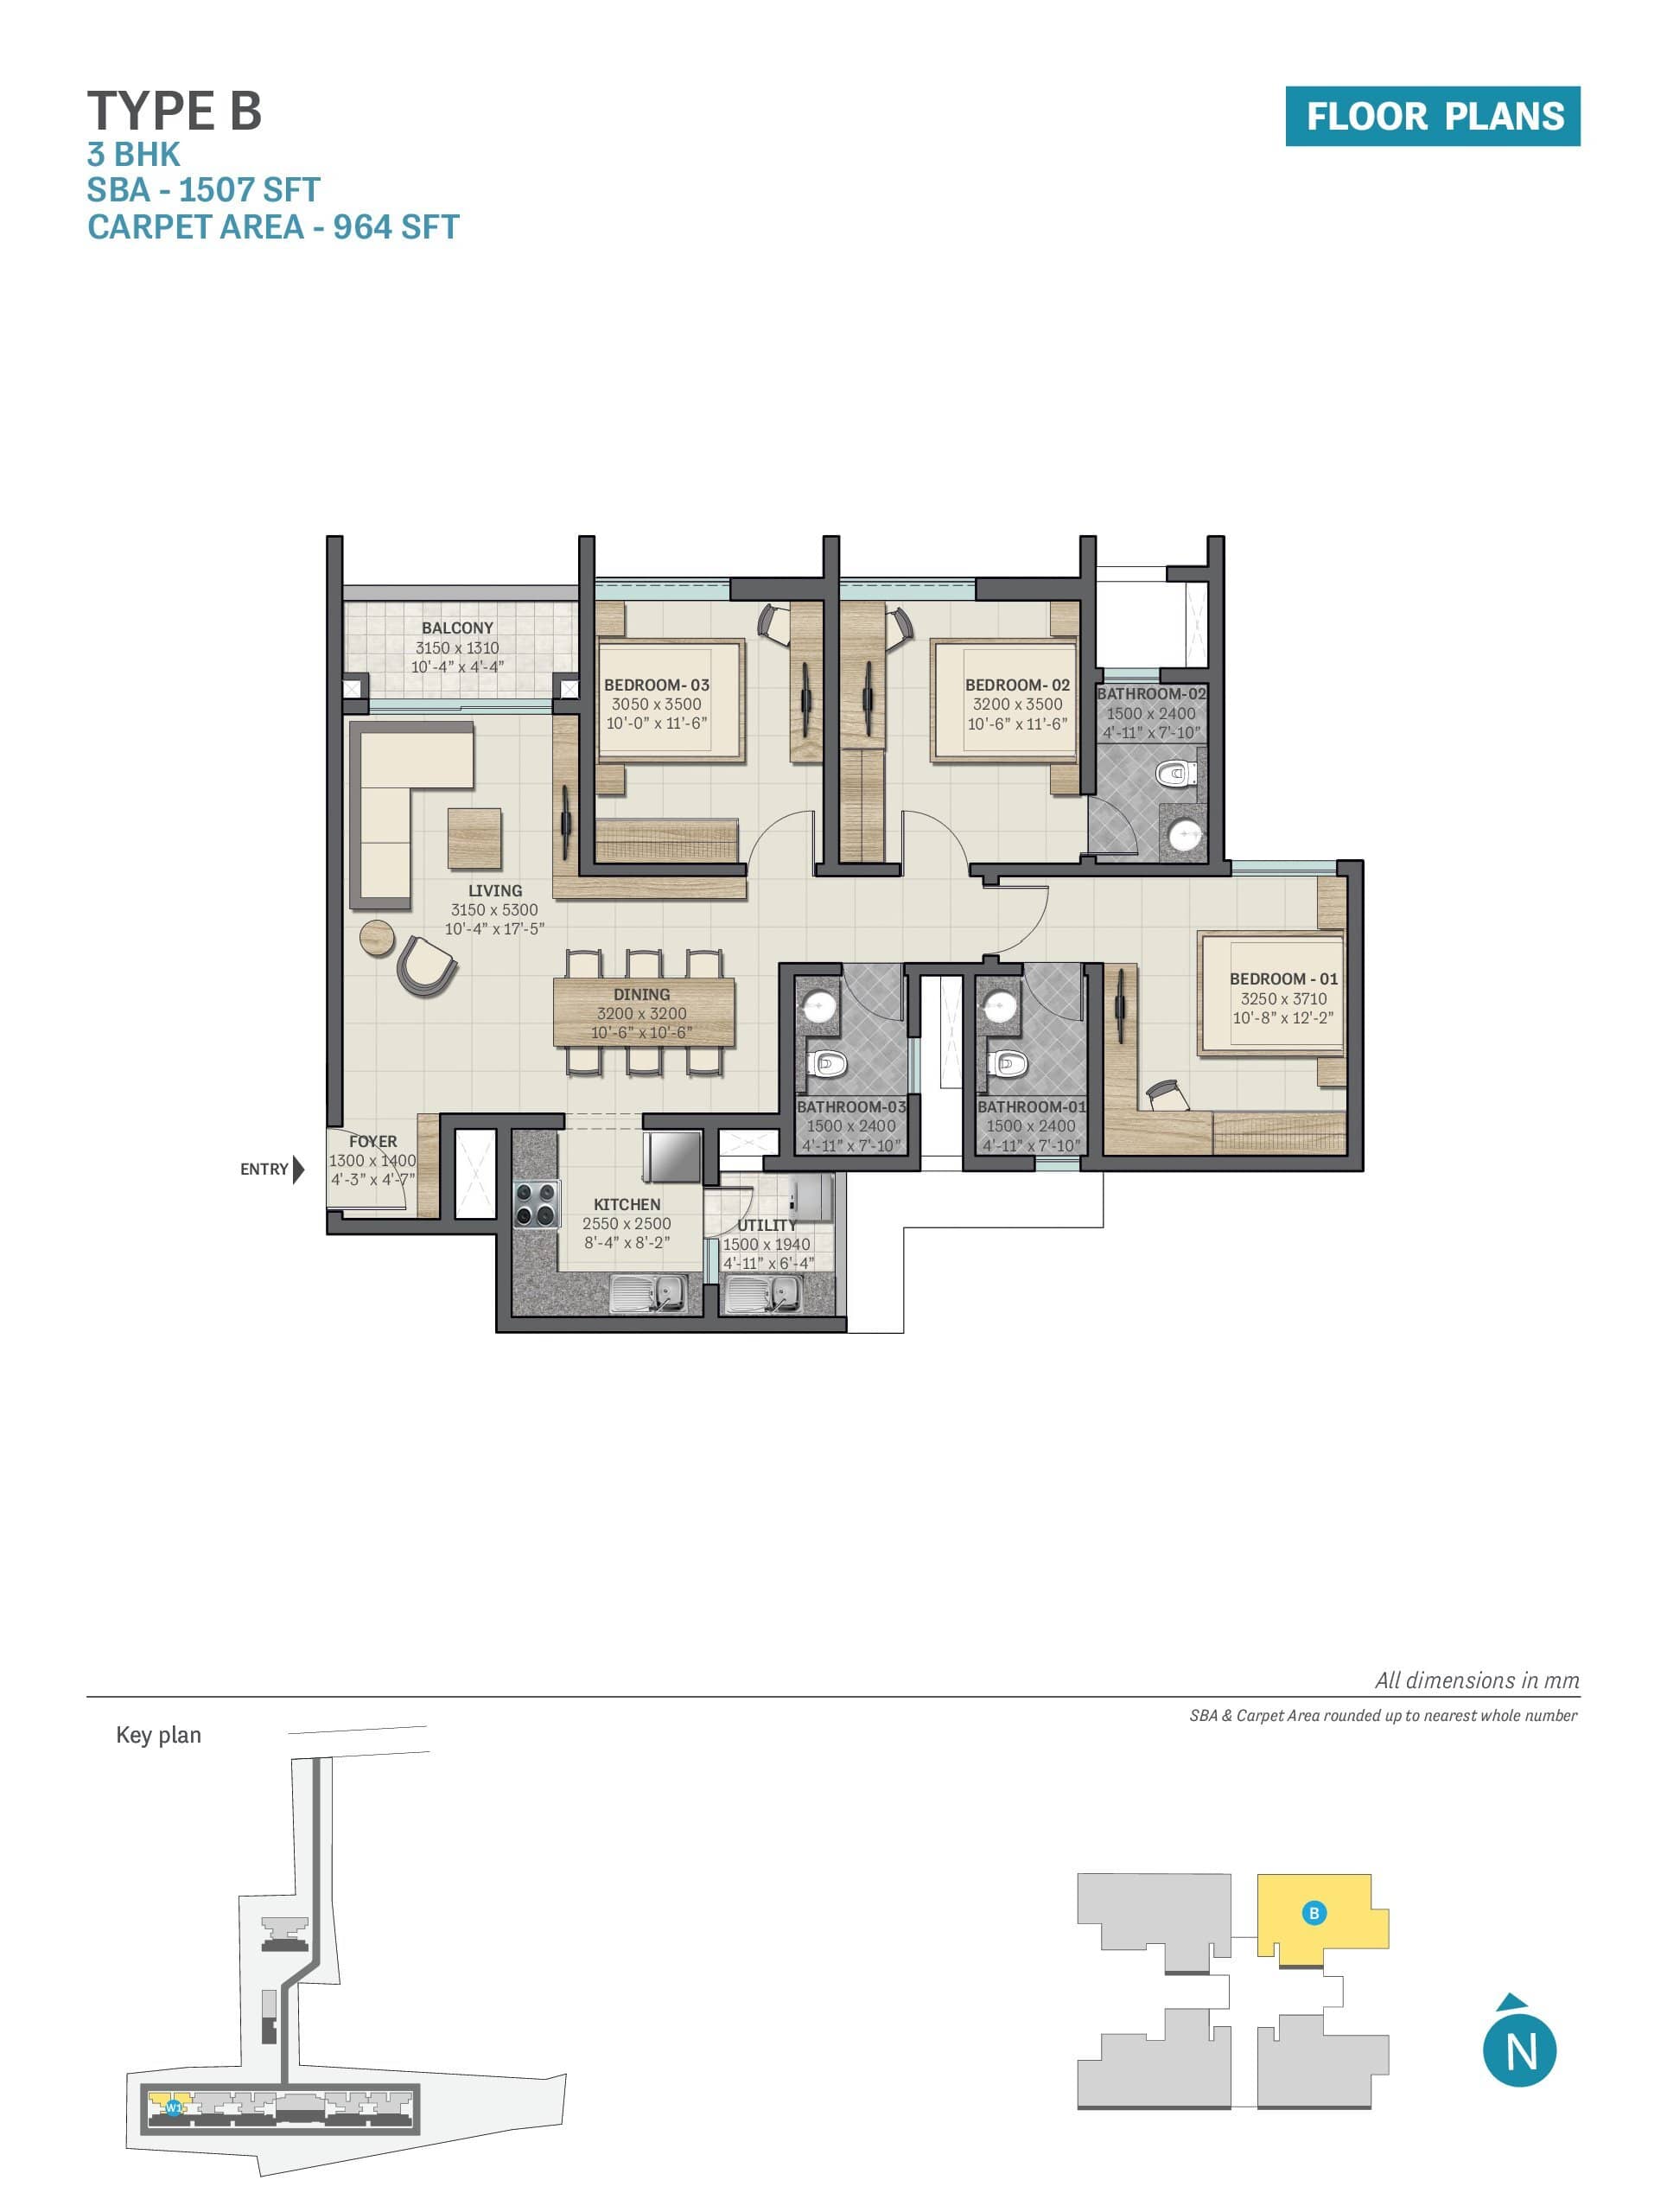 3 Bhk Floor Plan of Sobha Sentosa